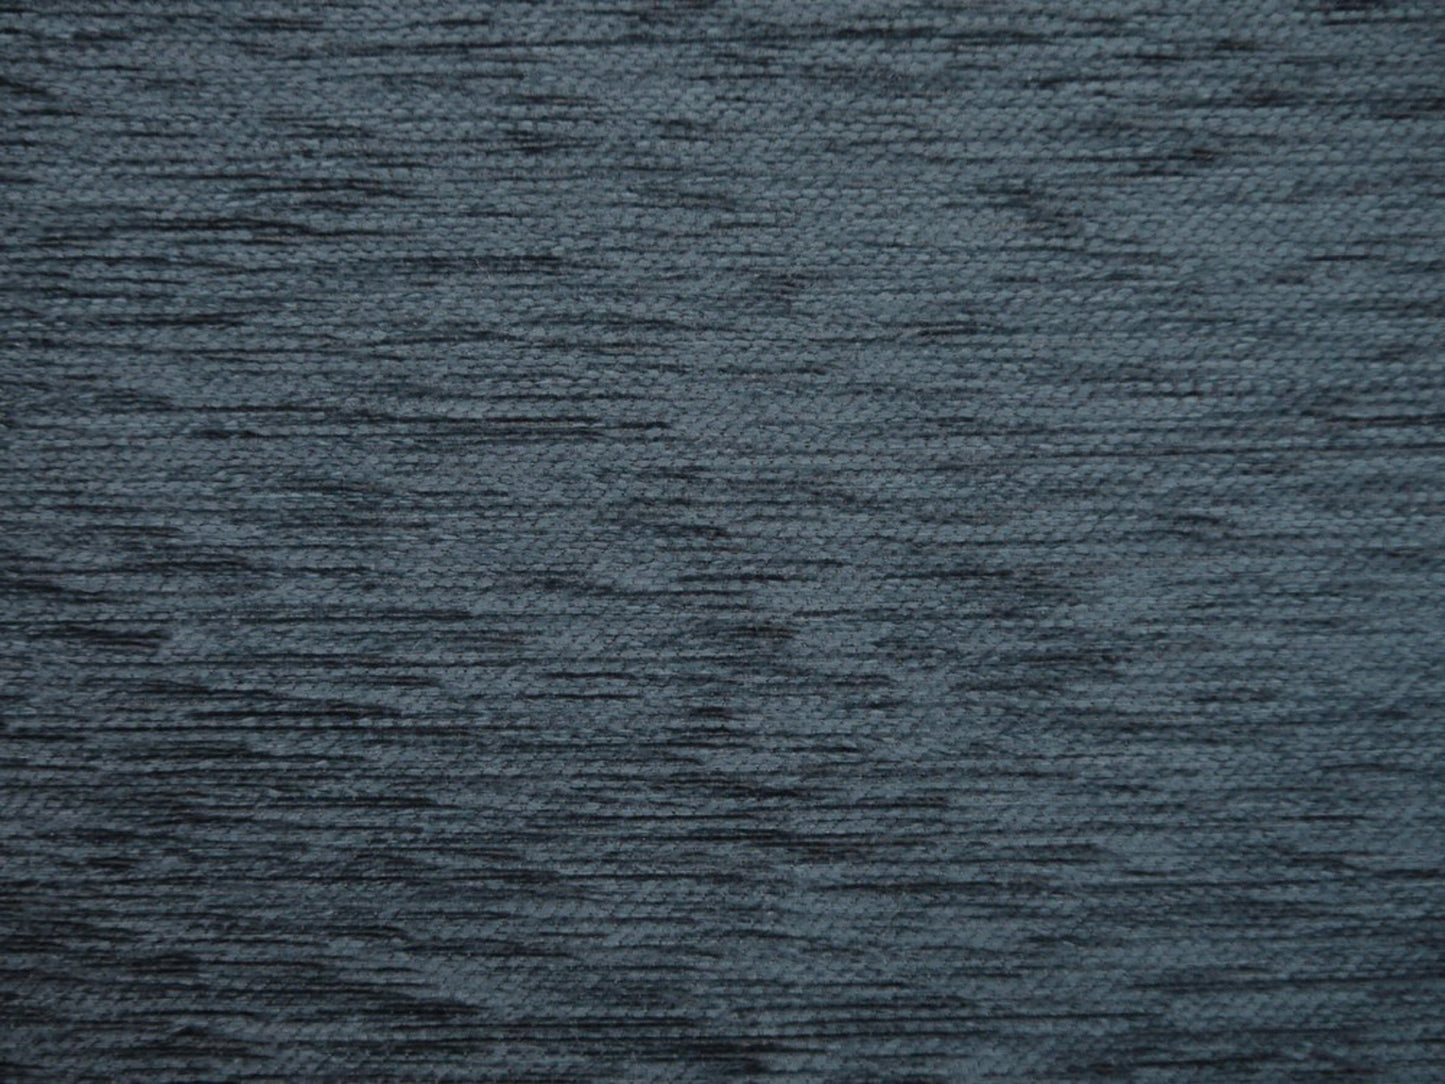 Cassino Fabric Samples - Rydan Interiors